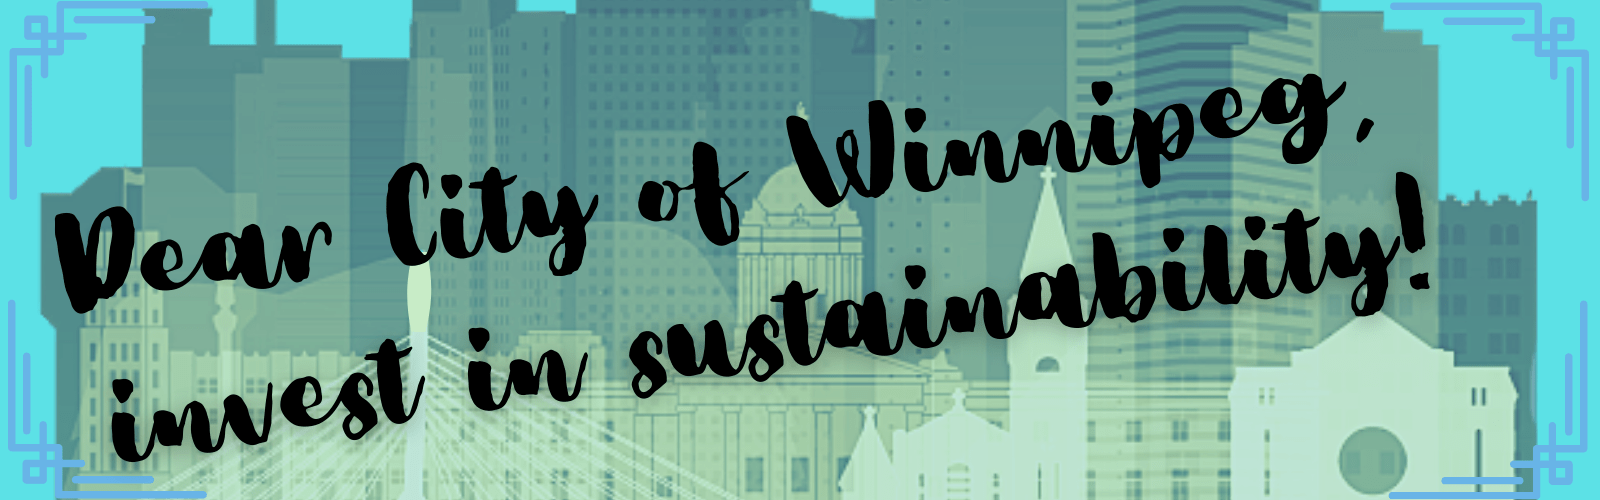 Dear City of Winnipeg, invest in sustainability!